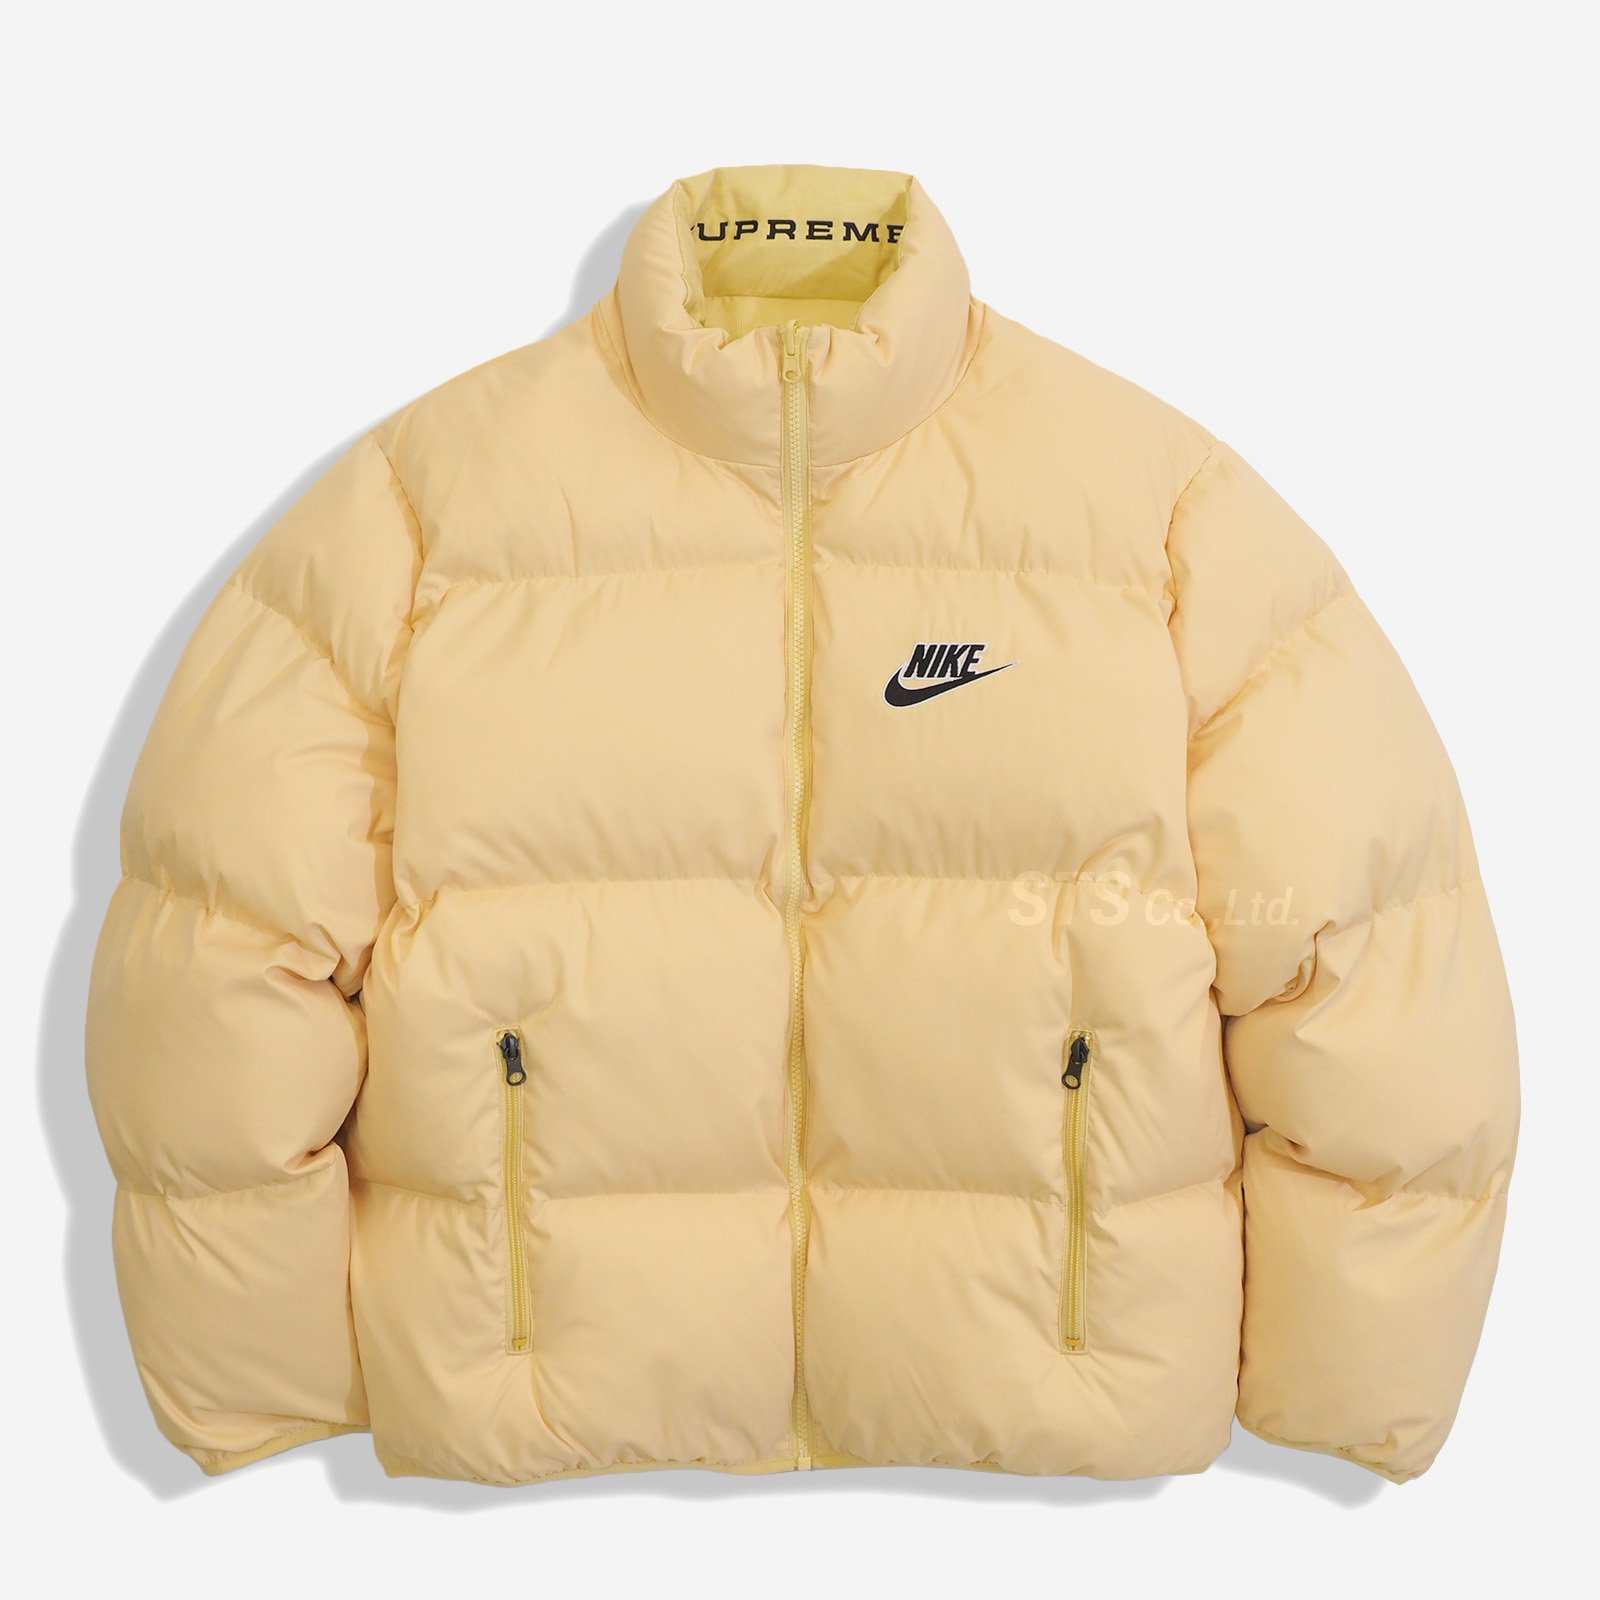 supreme Nike puffy jacket M